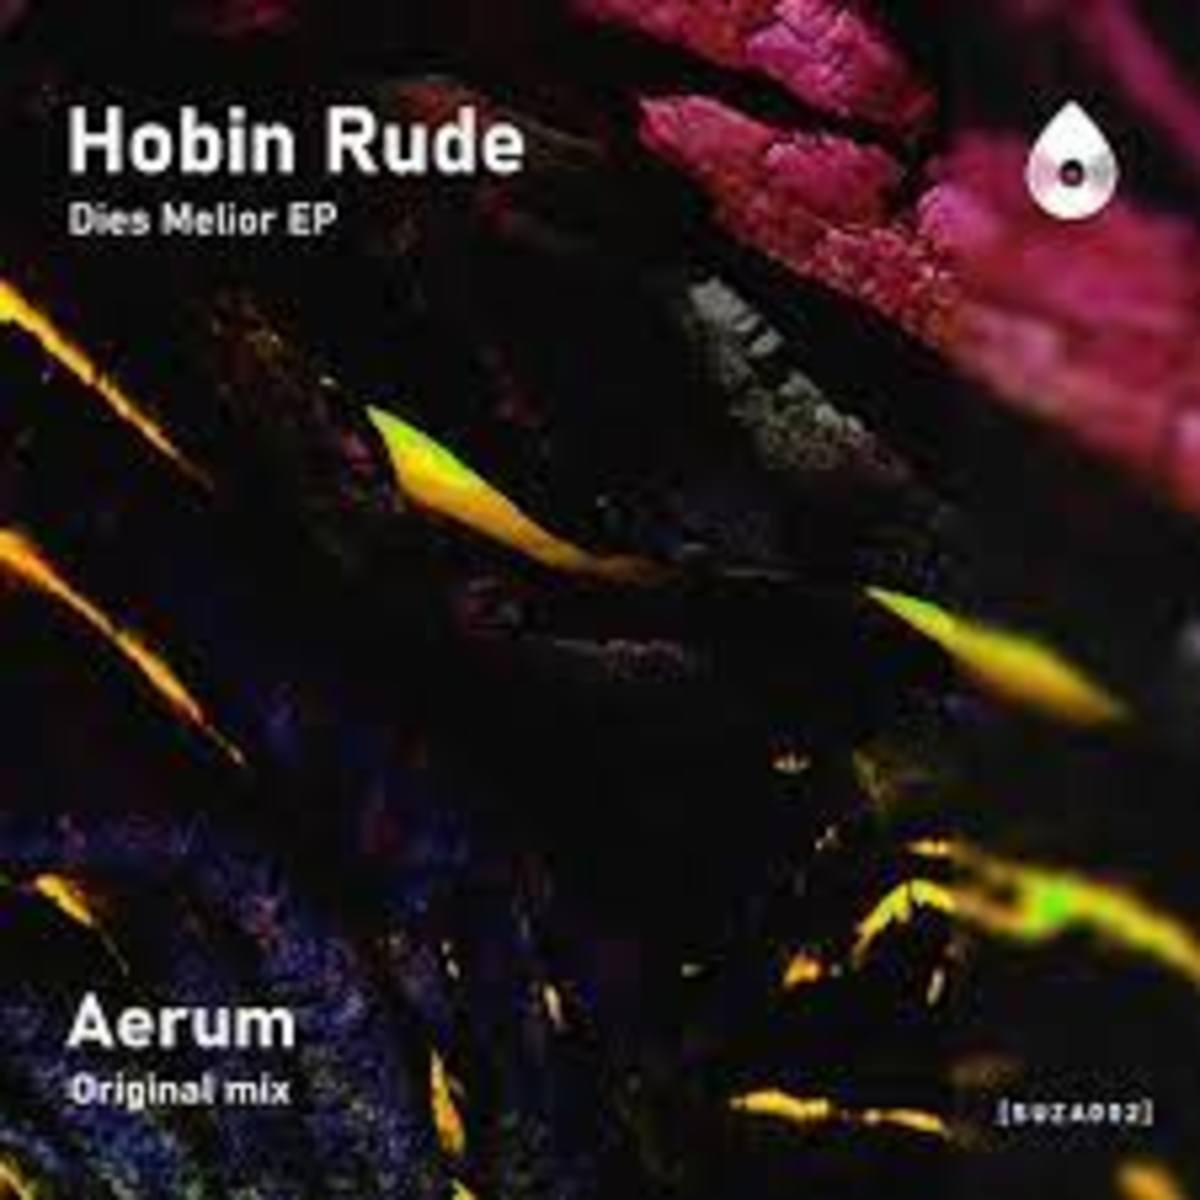 "AERUM (ORIGINAL MIX)" - HOBIN RUDE [SUZA RECORDS]